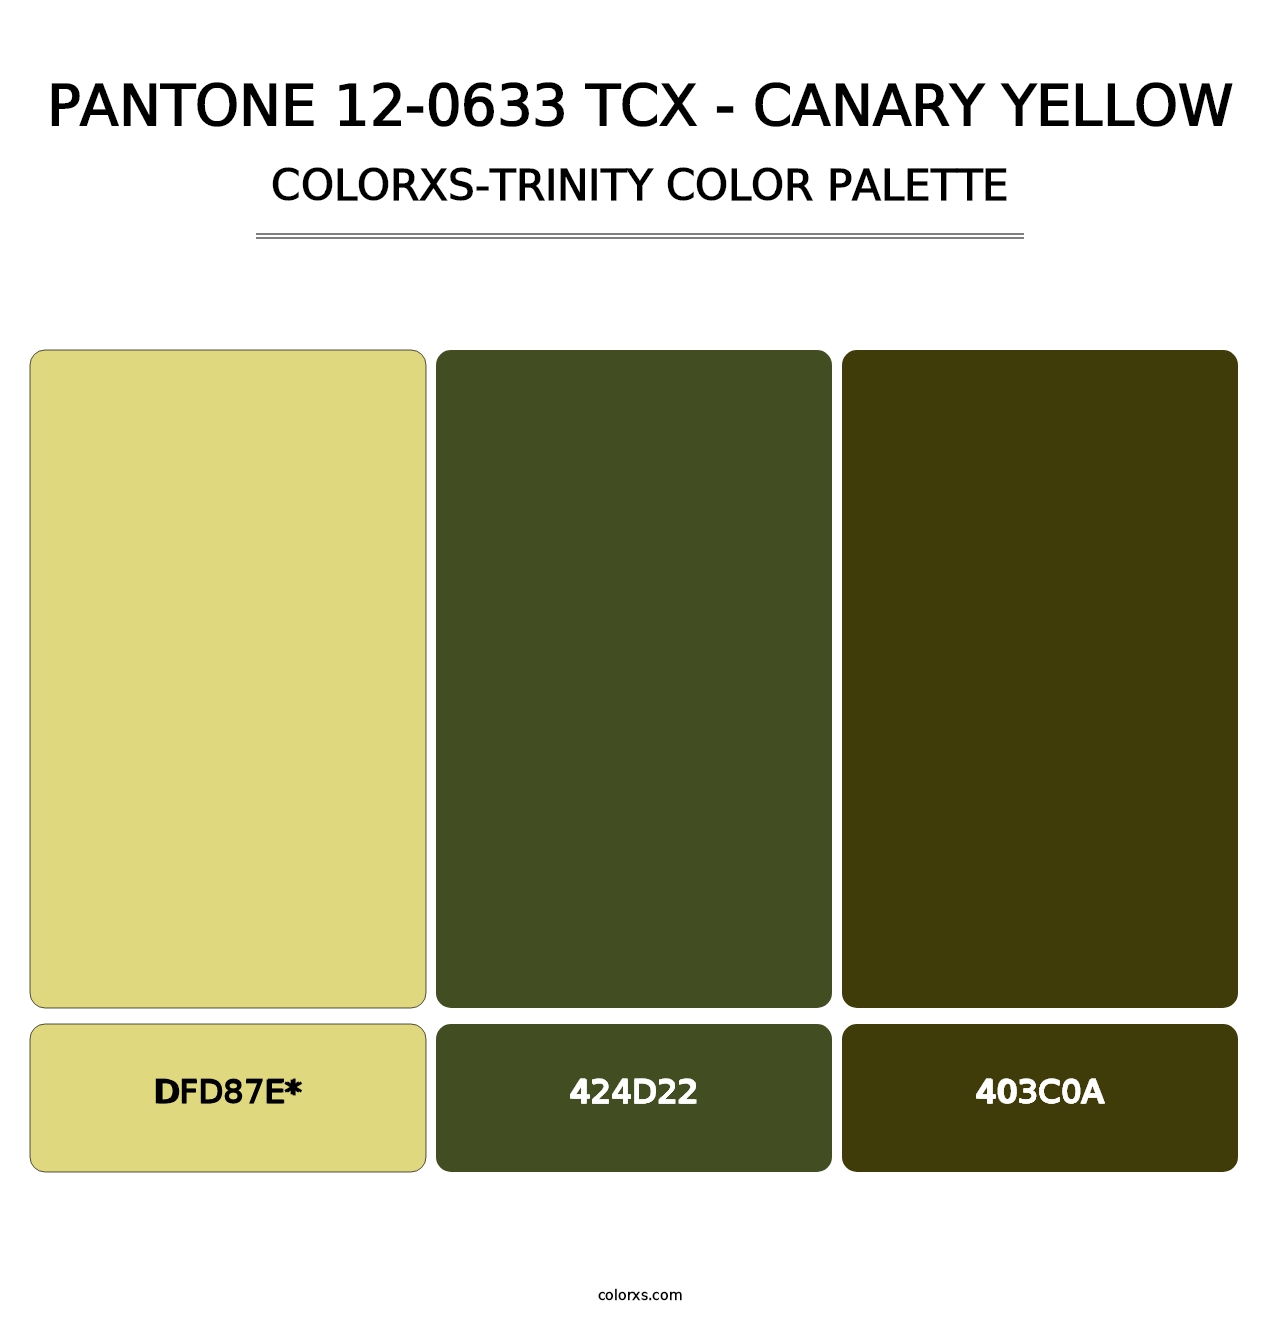 PANTONE 12-0633 TCX - Canary Yellow - Colorxs Trinity Palette